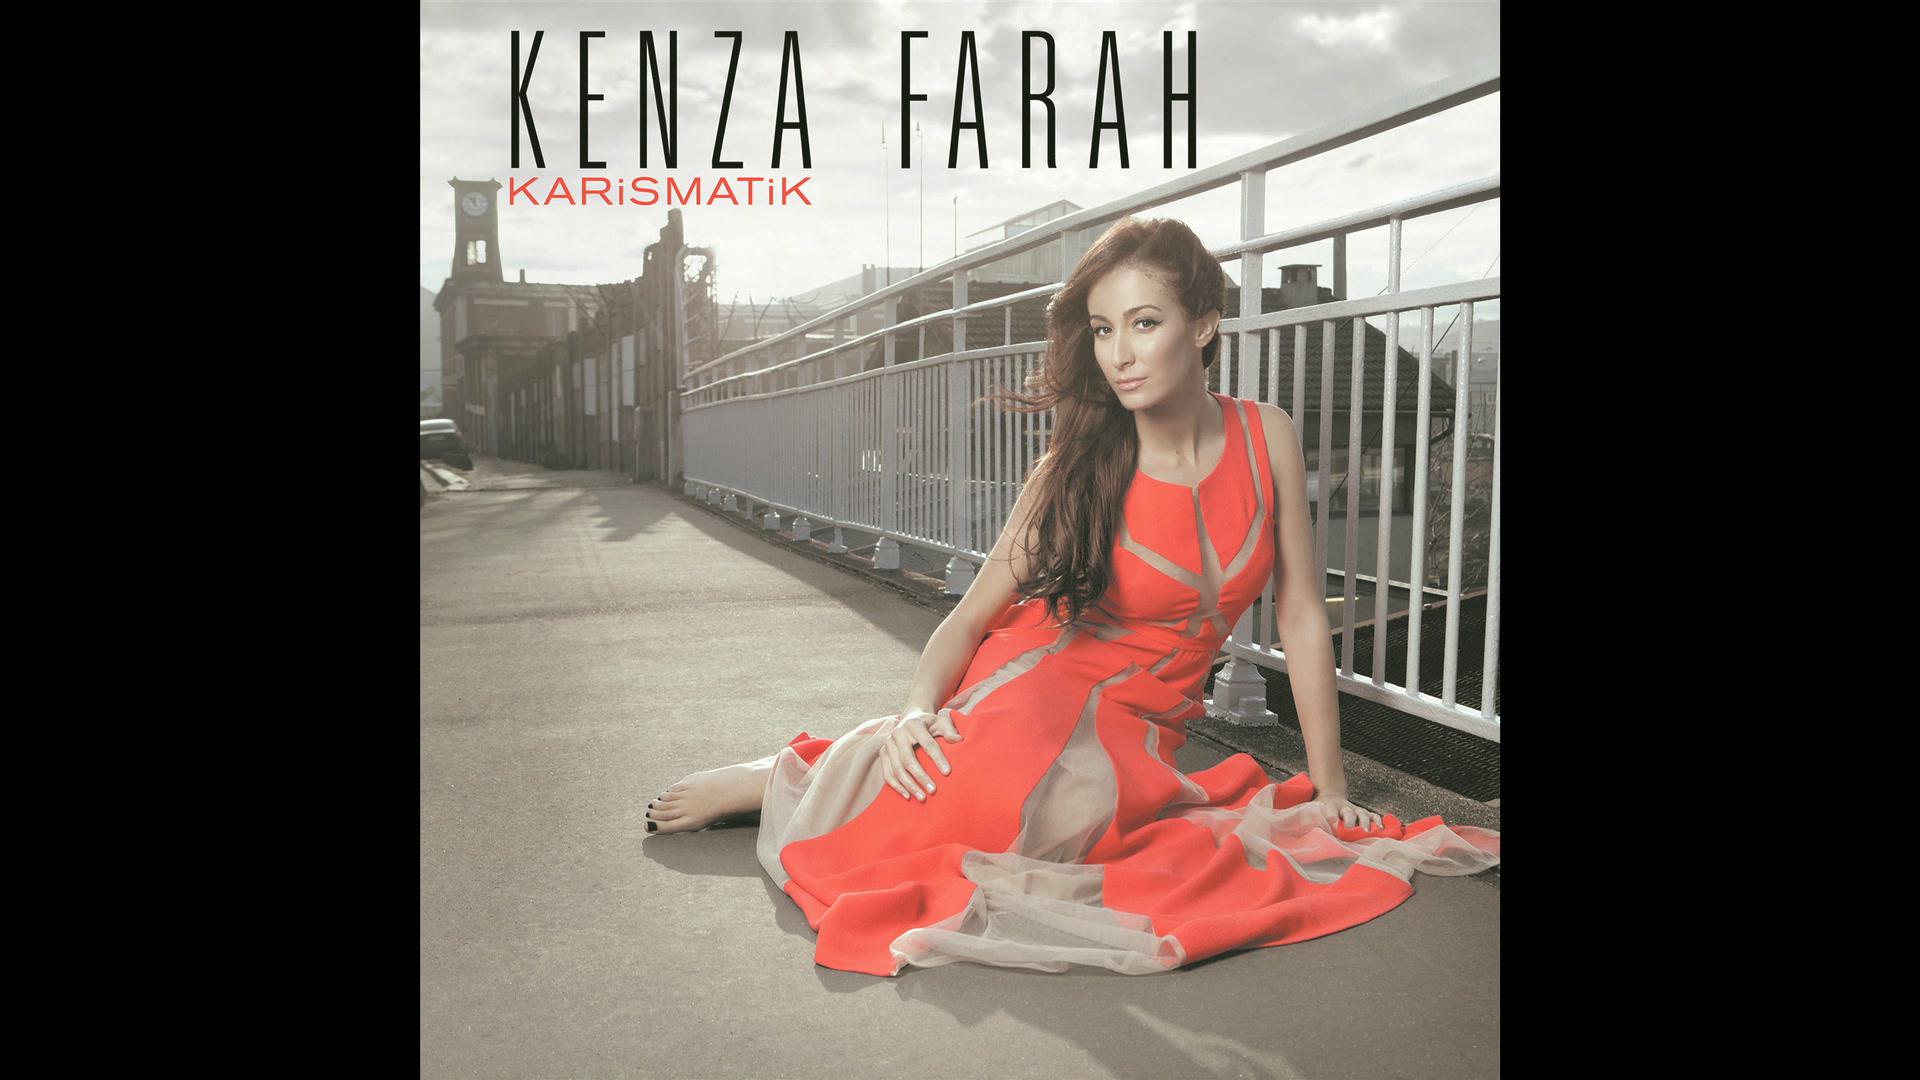 Kenza Farah - Etre heureux (Audio)